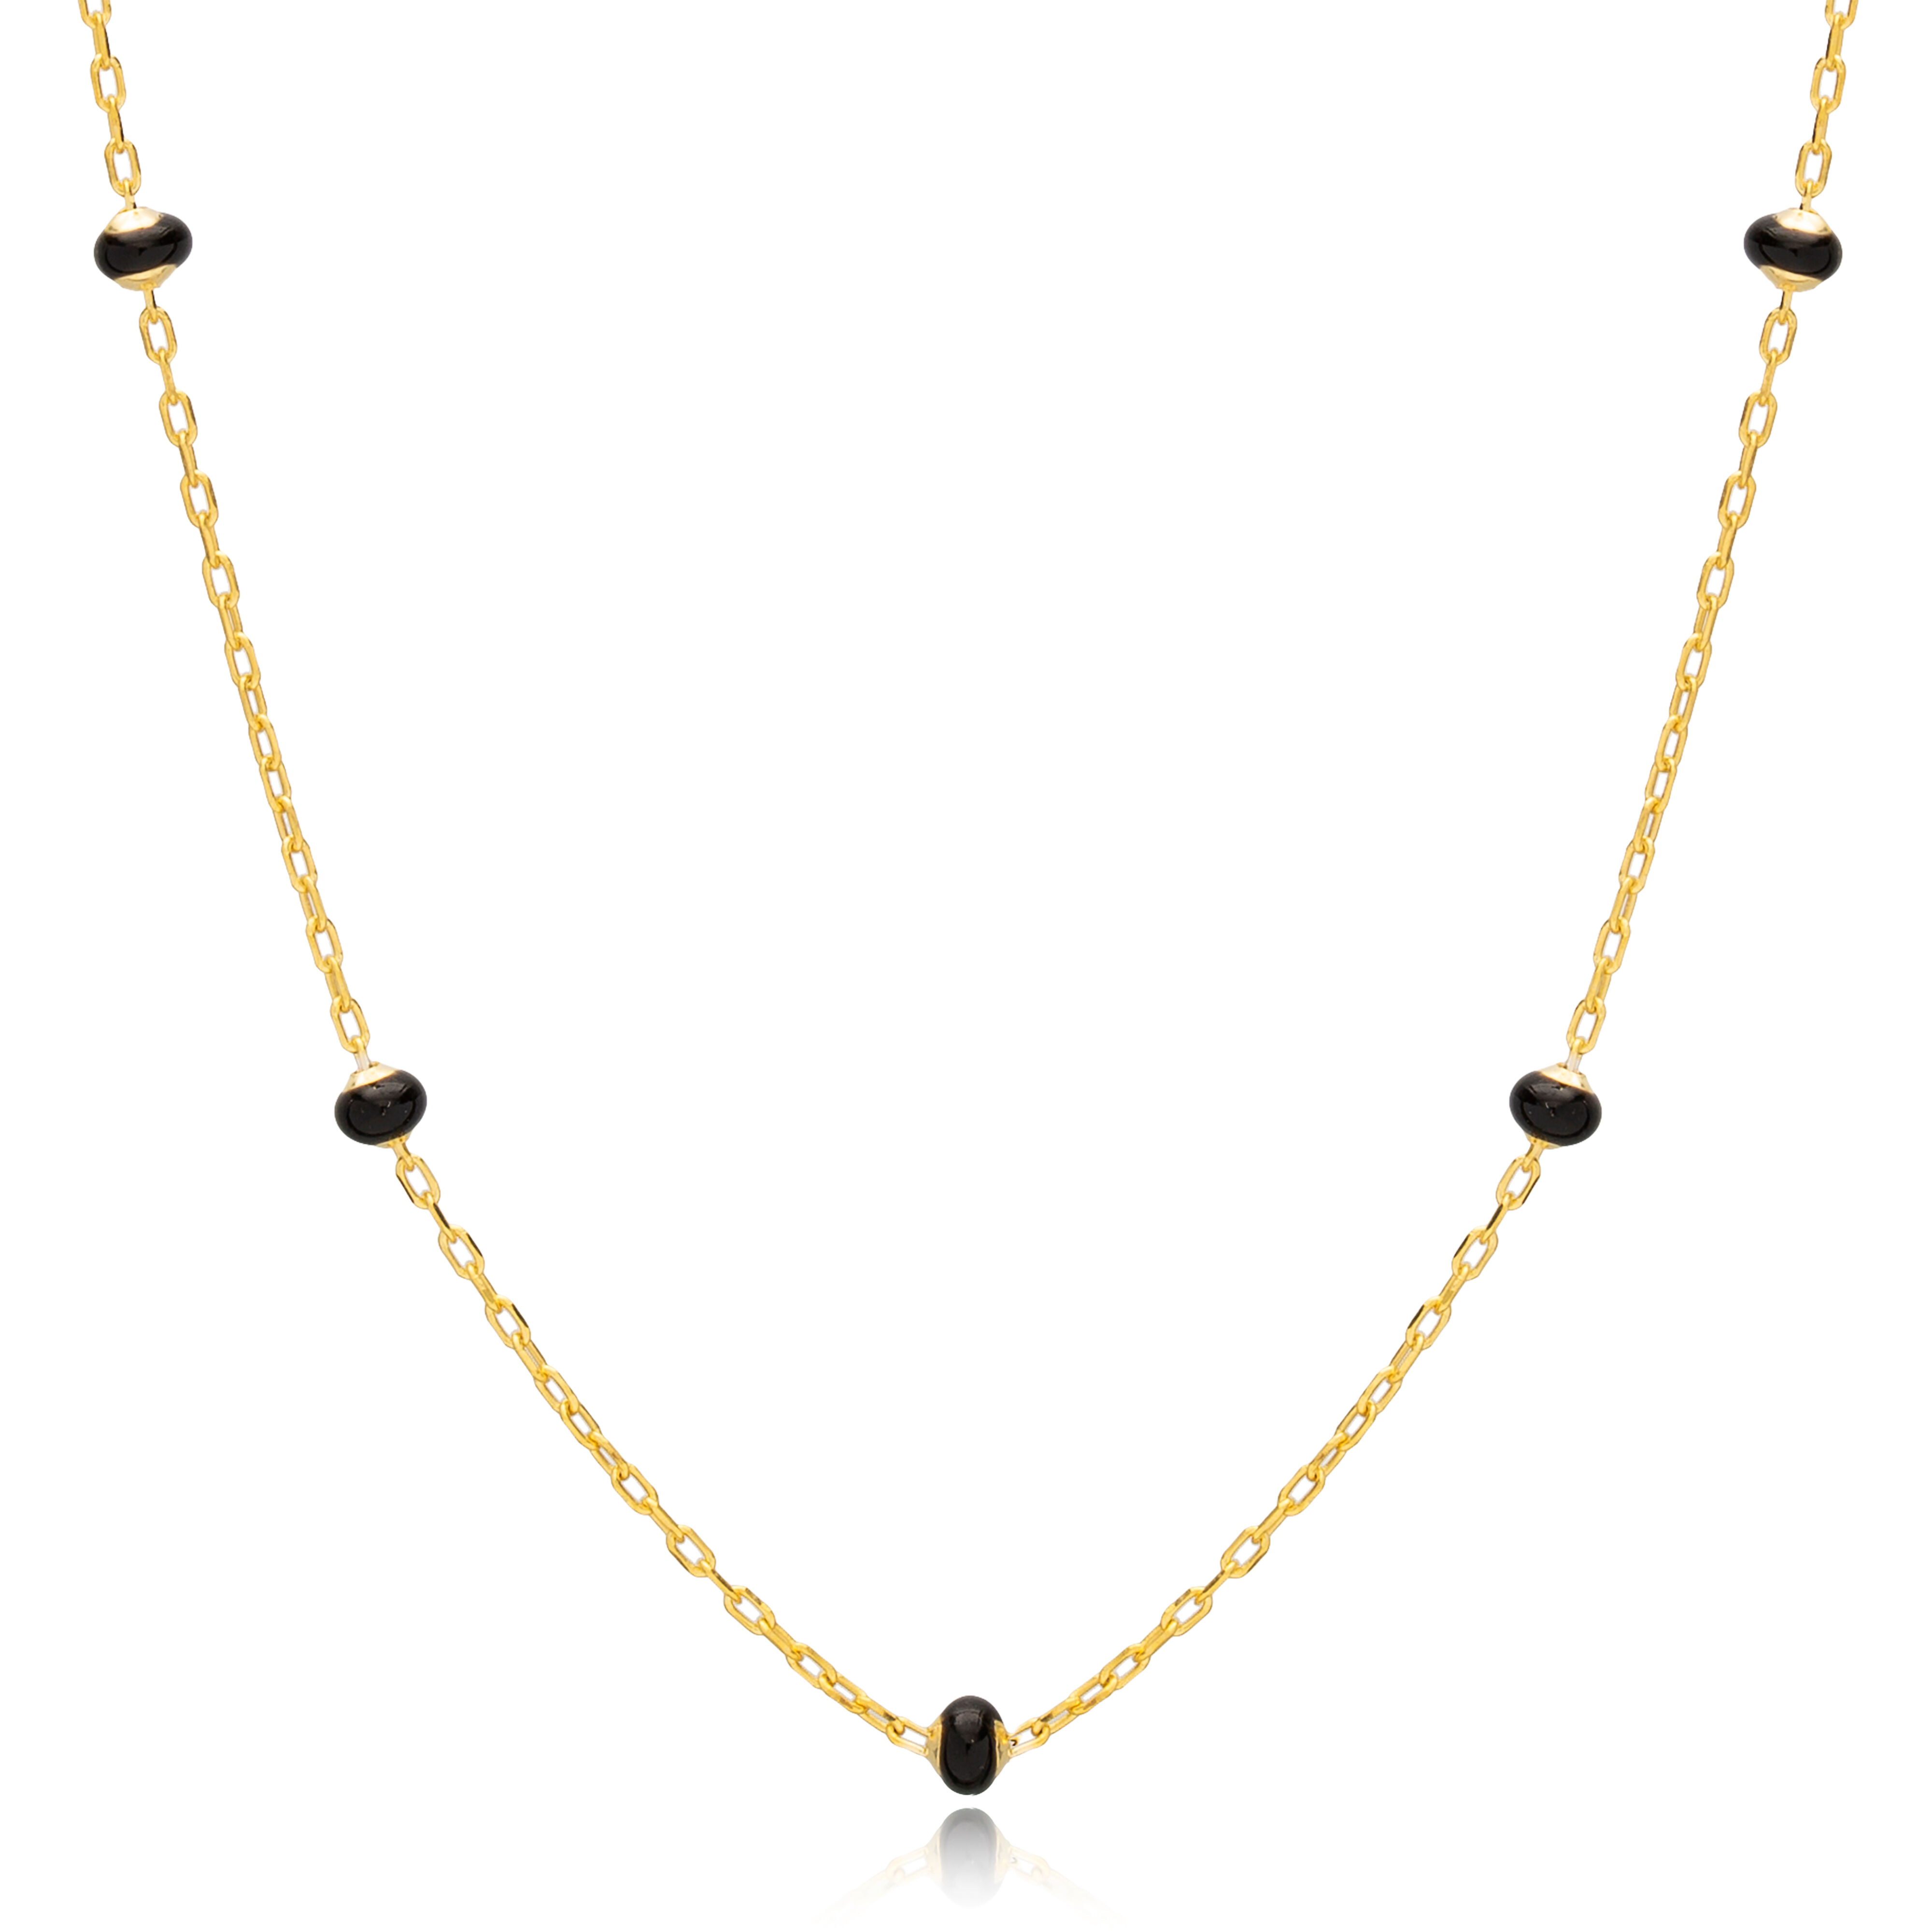 Enamel Black Beaded Elegant Chain Necklace Handmade Turkish 925 Sterling Silver Jewelry